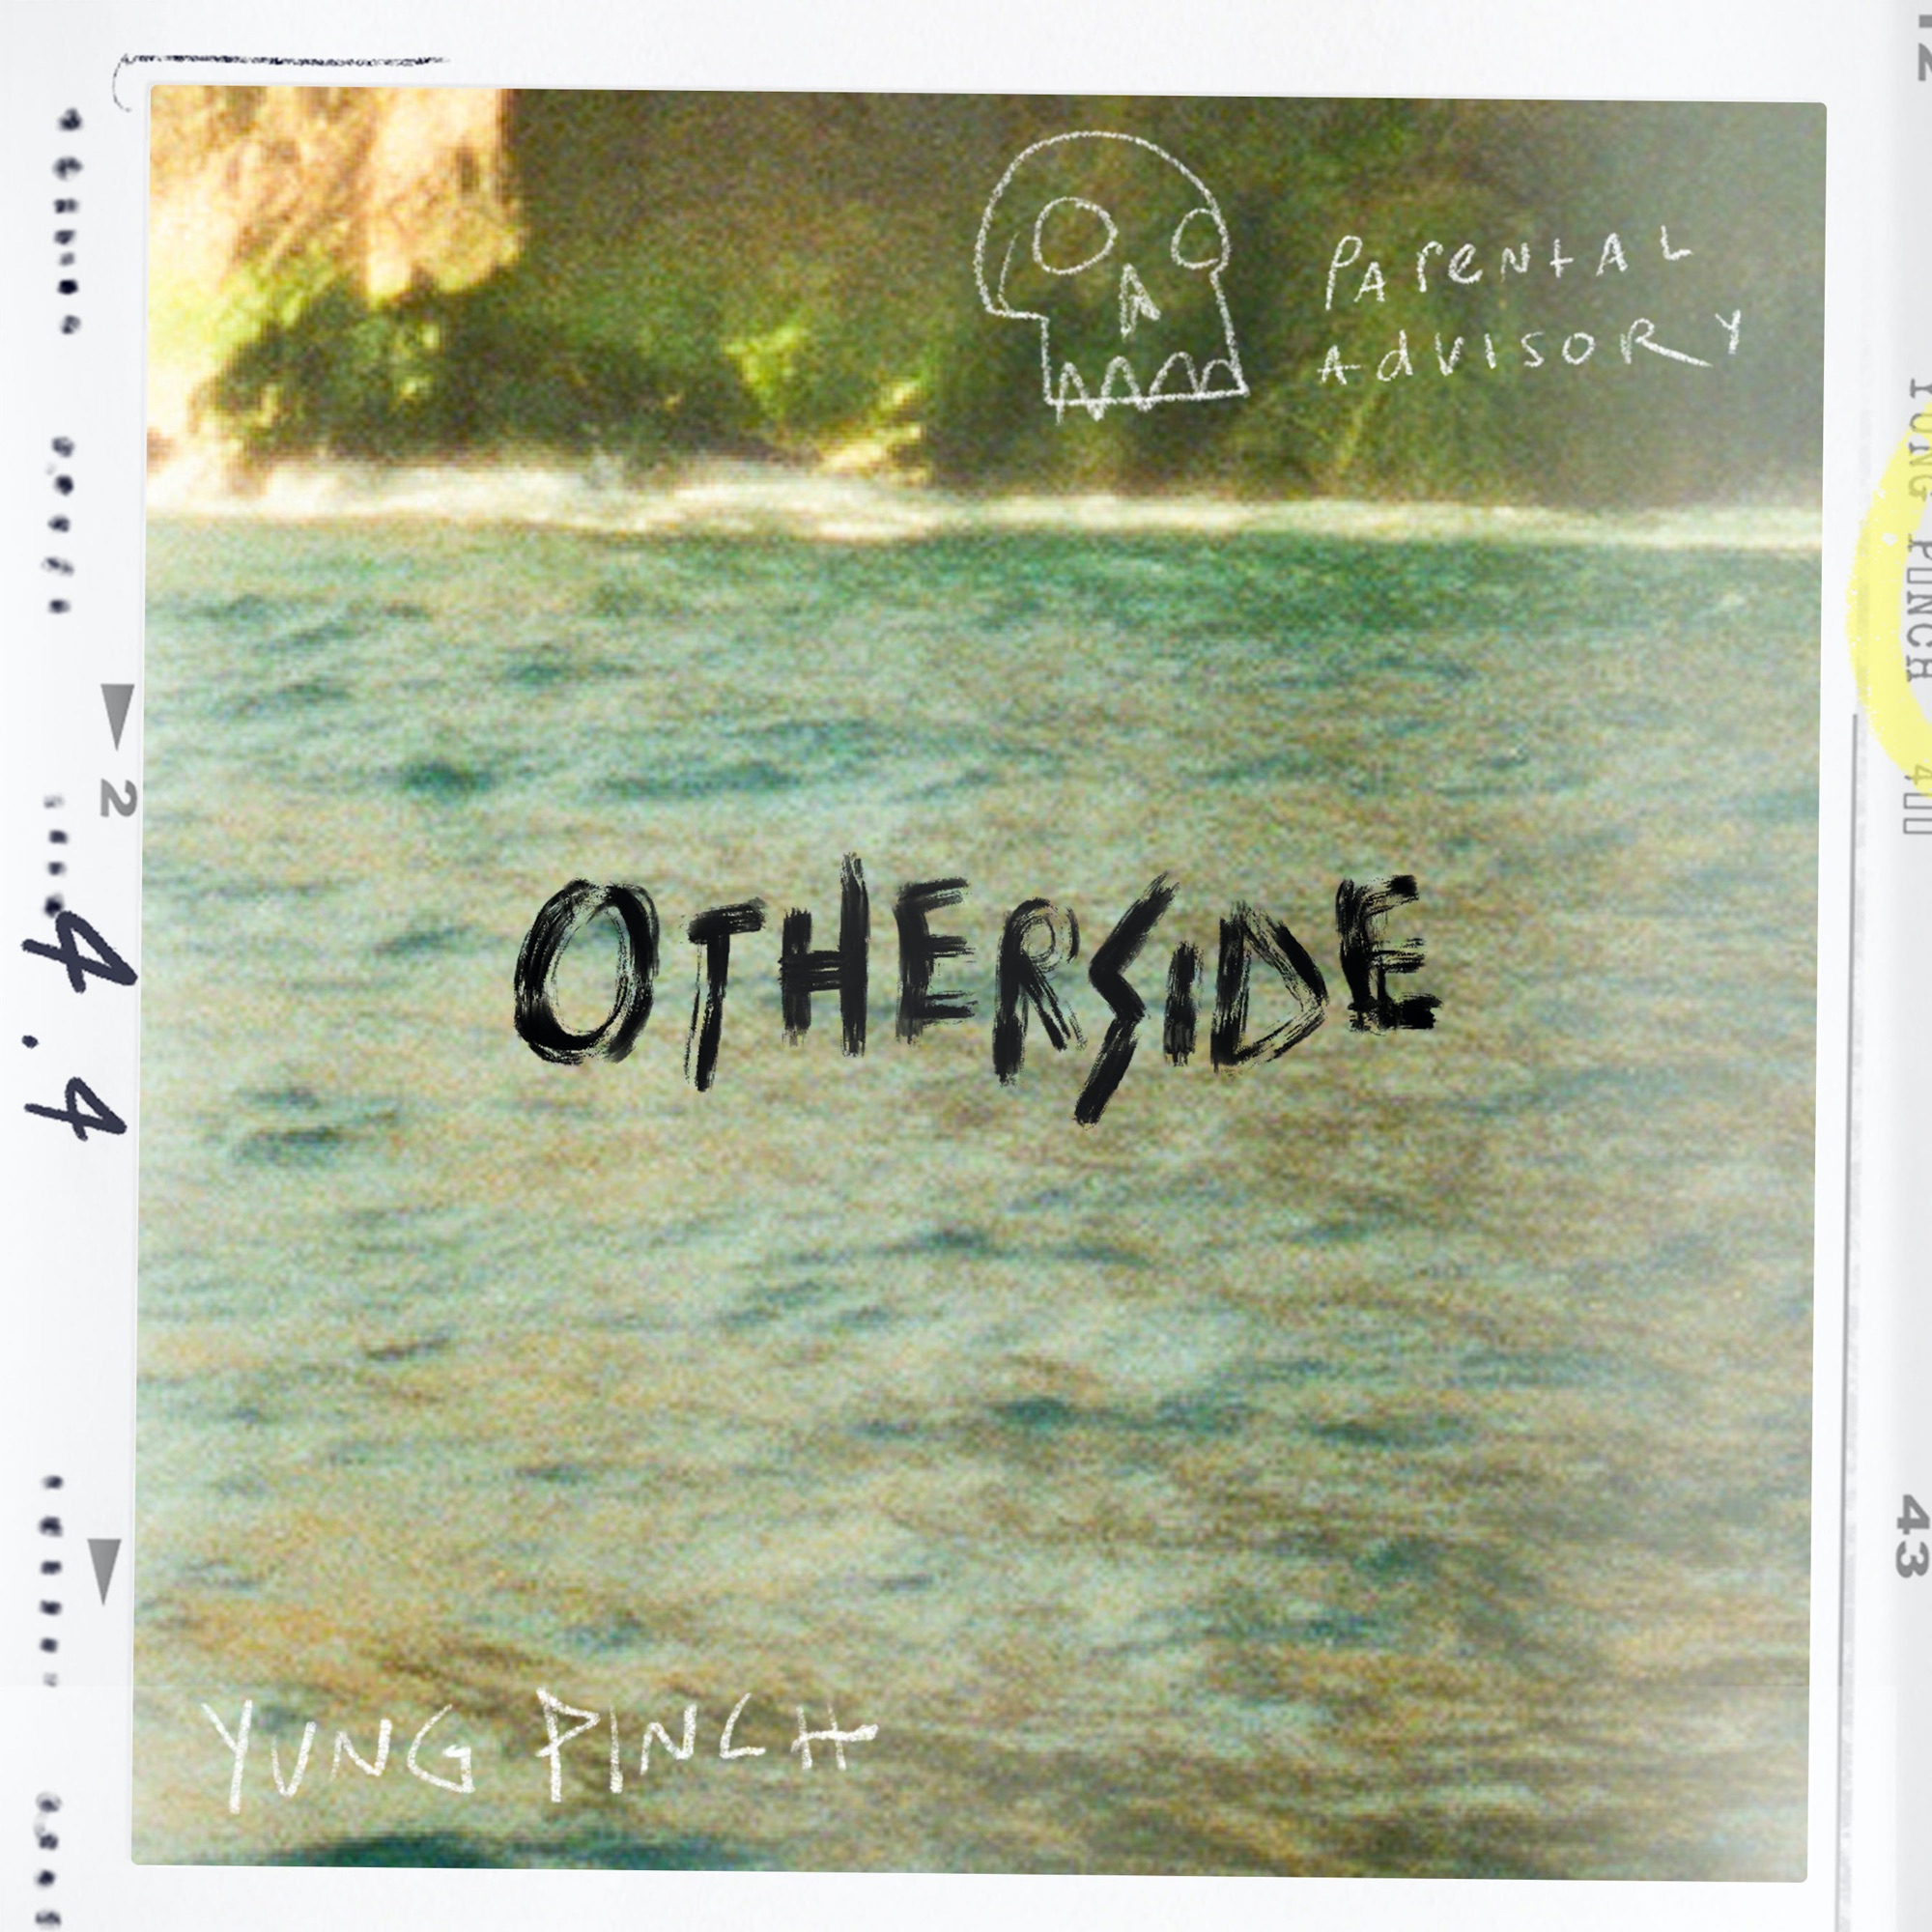 Yung Pinch - Otherside - Single